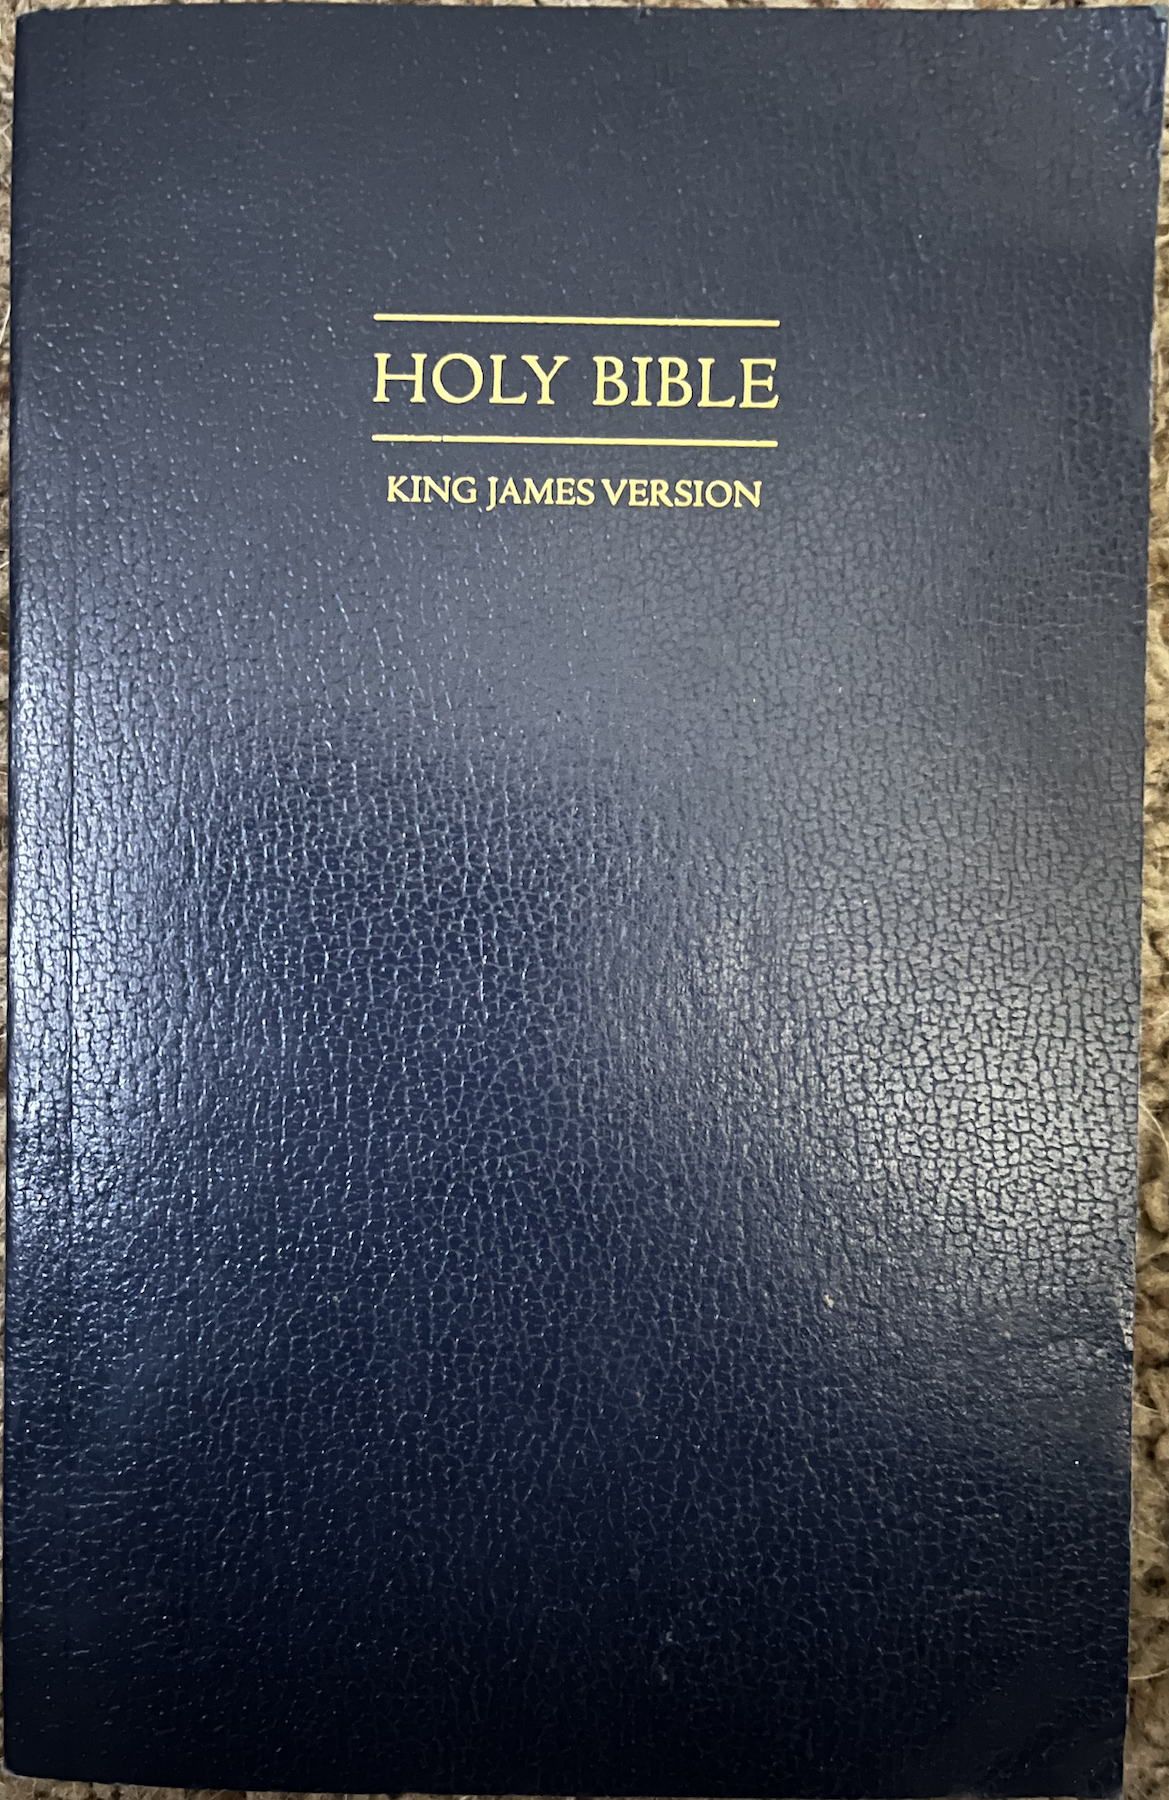 LDS King James Bible 2012 edition paperback